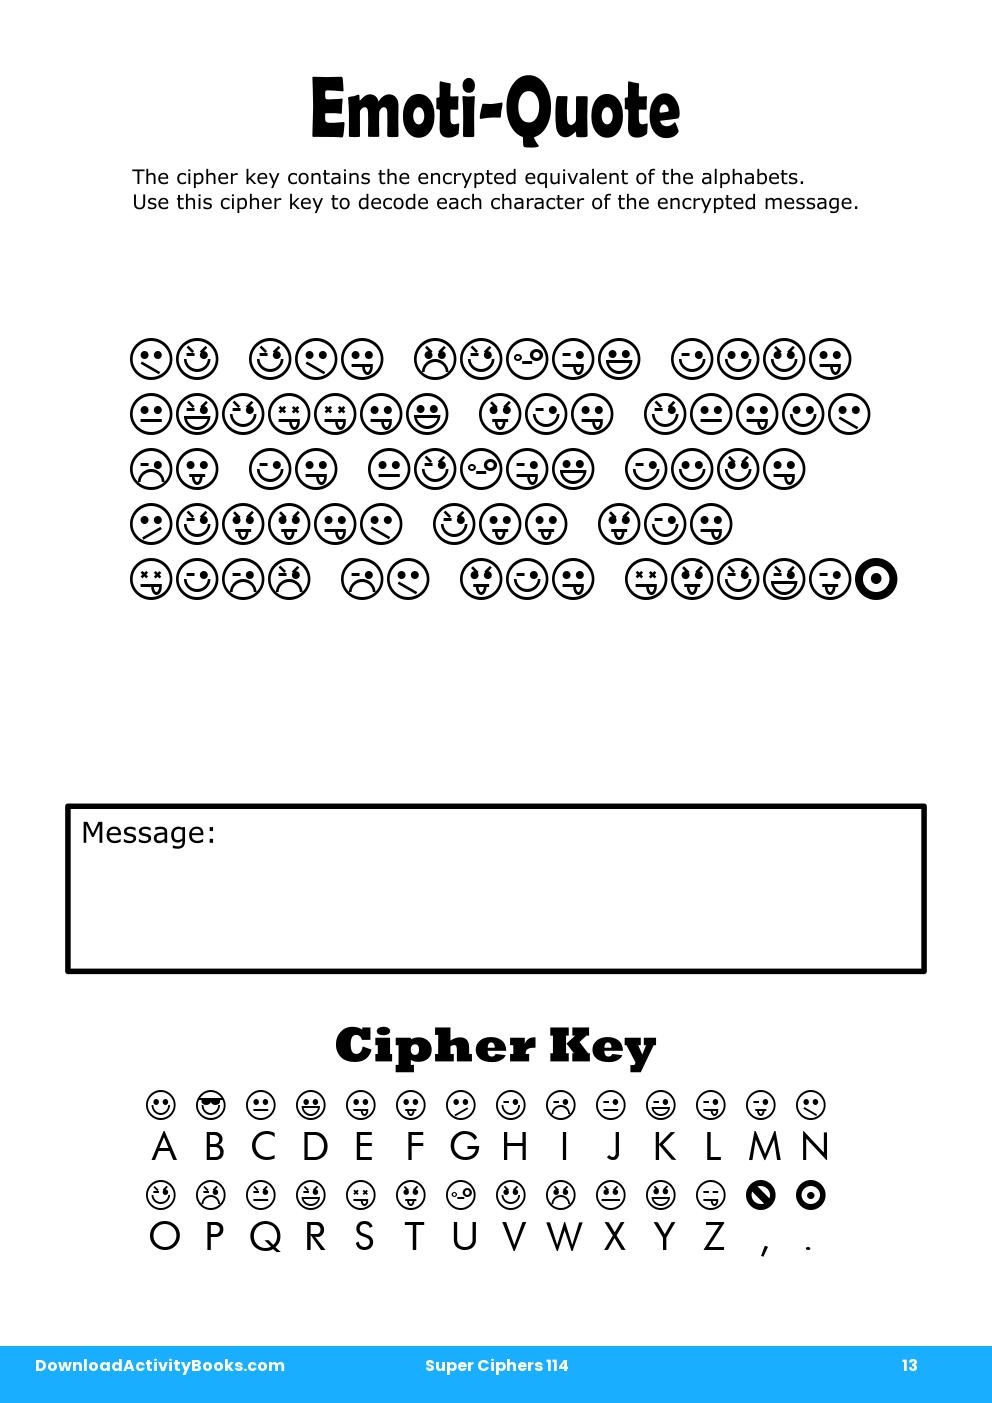 Emoti-Quote in Super Ciphers 114